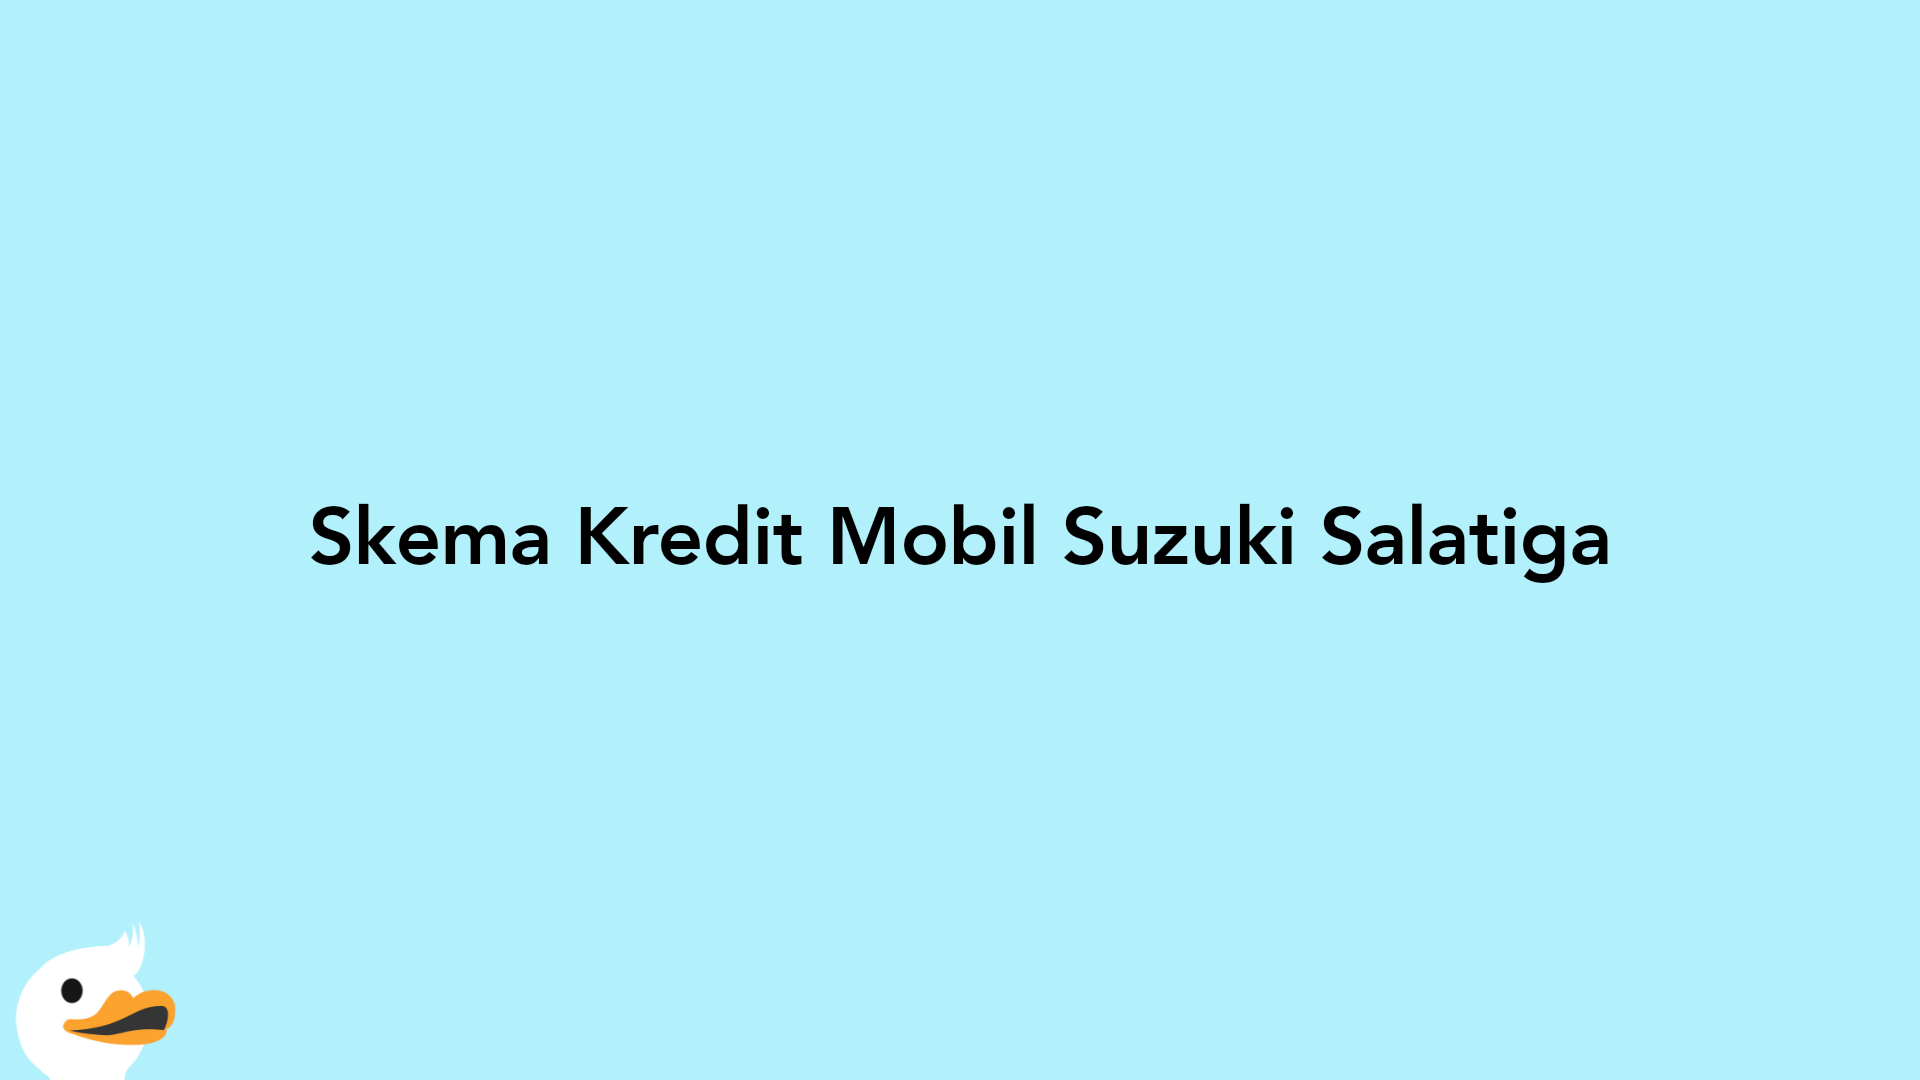 Skema Kredit Mobil Suzuki Salatiga